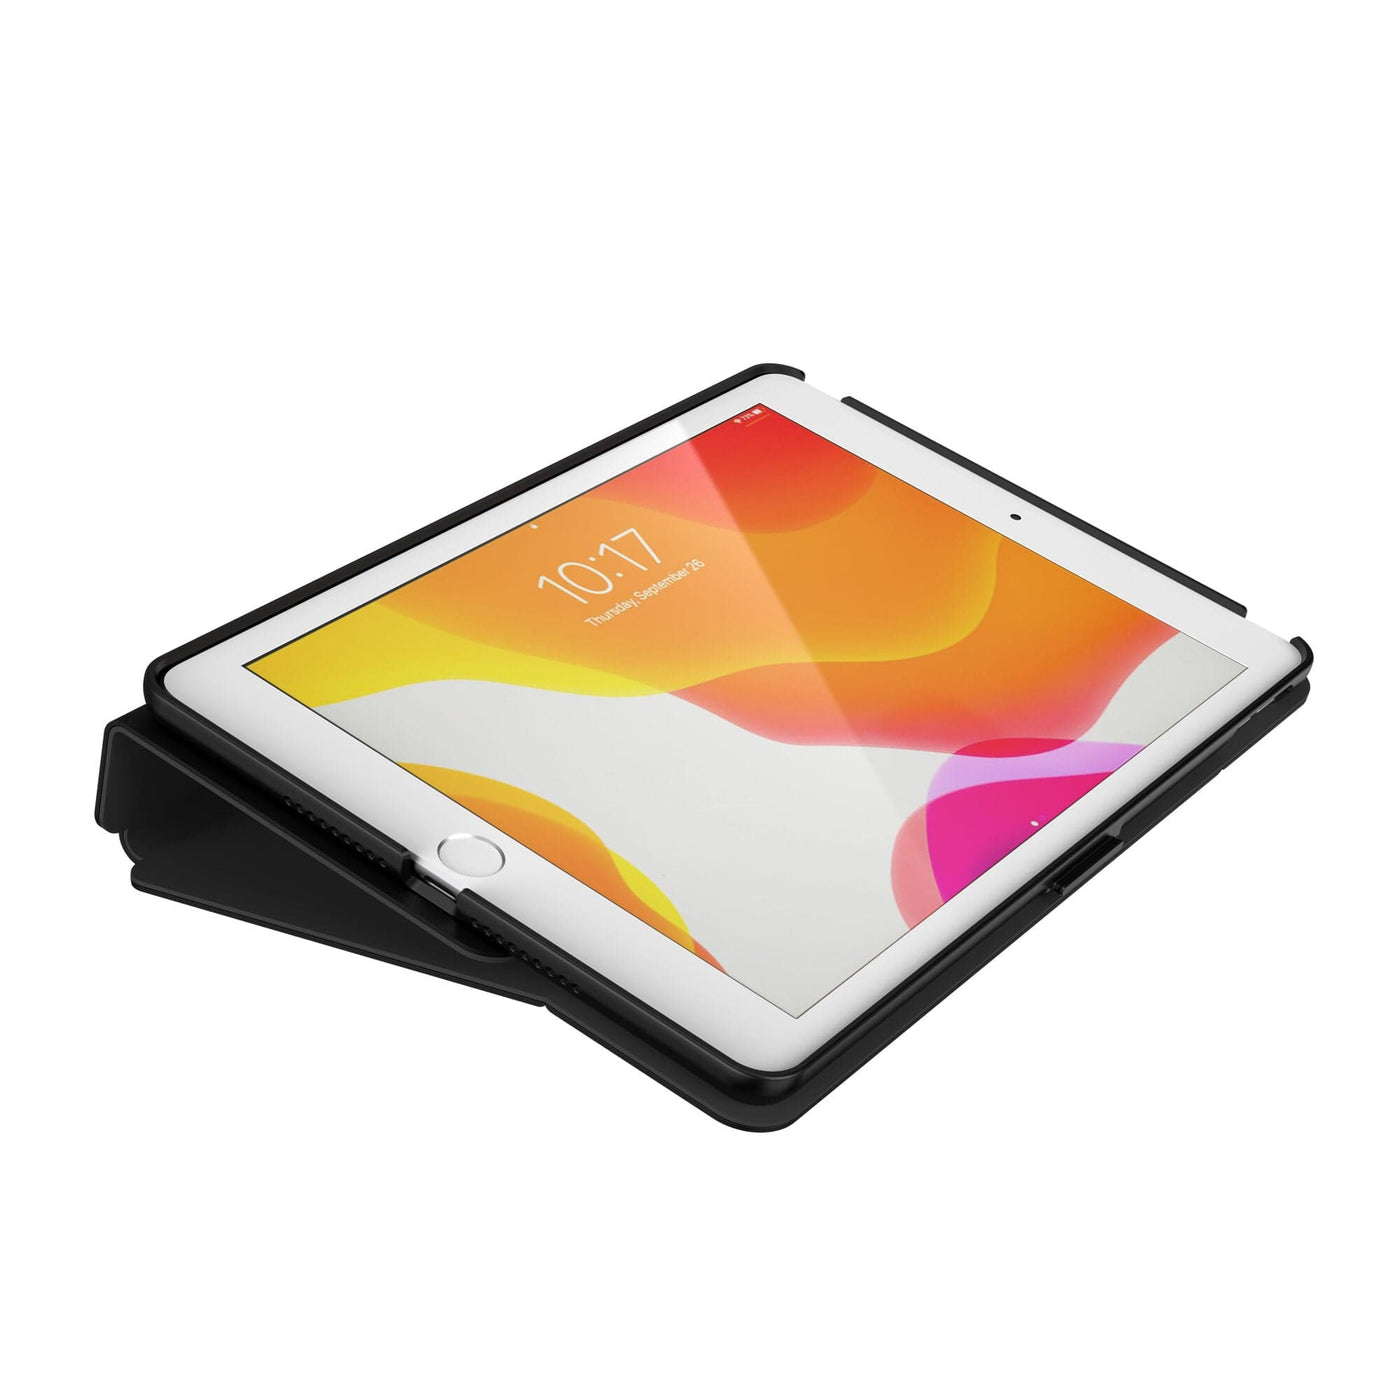 Speck Balance iPad Cases Best 10.2-inch - $35.96